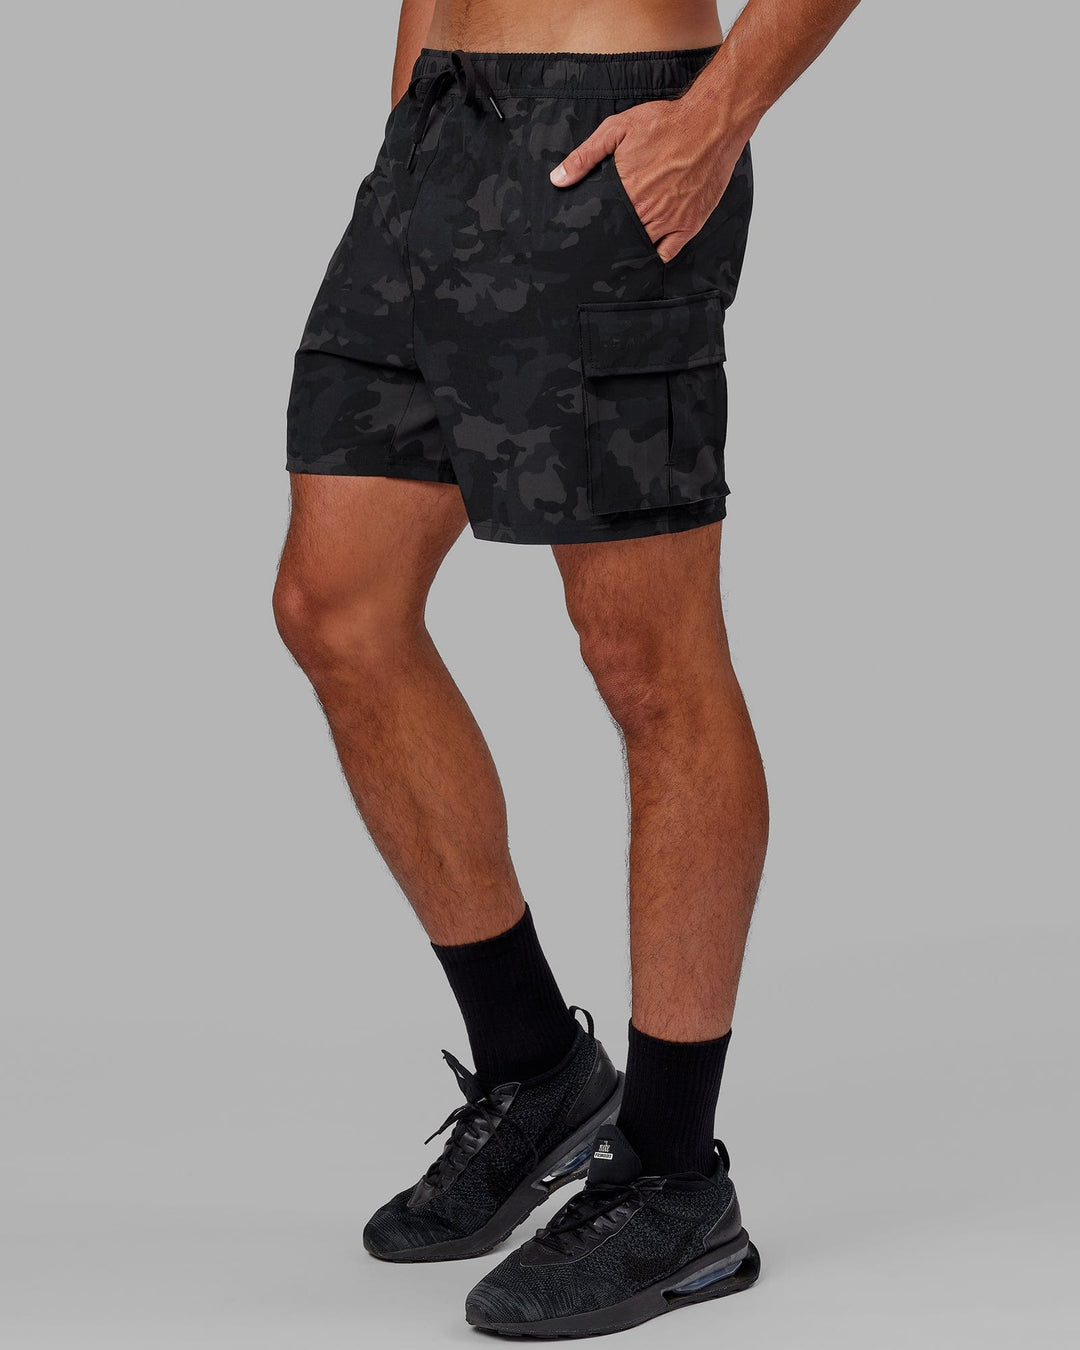 Man wearing Energy Stretch Performance Cargo Short - Black Camo